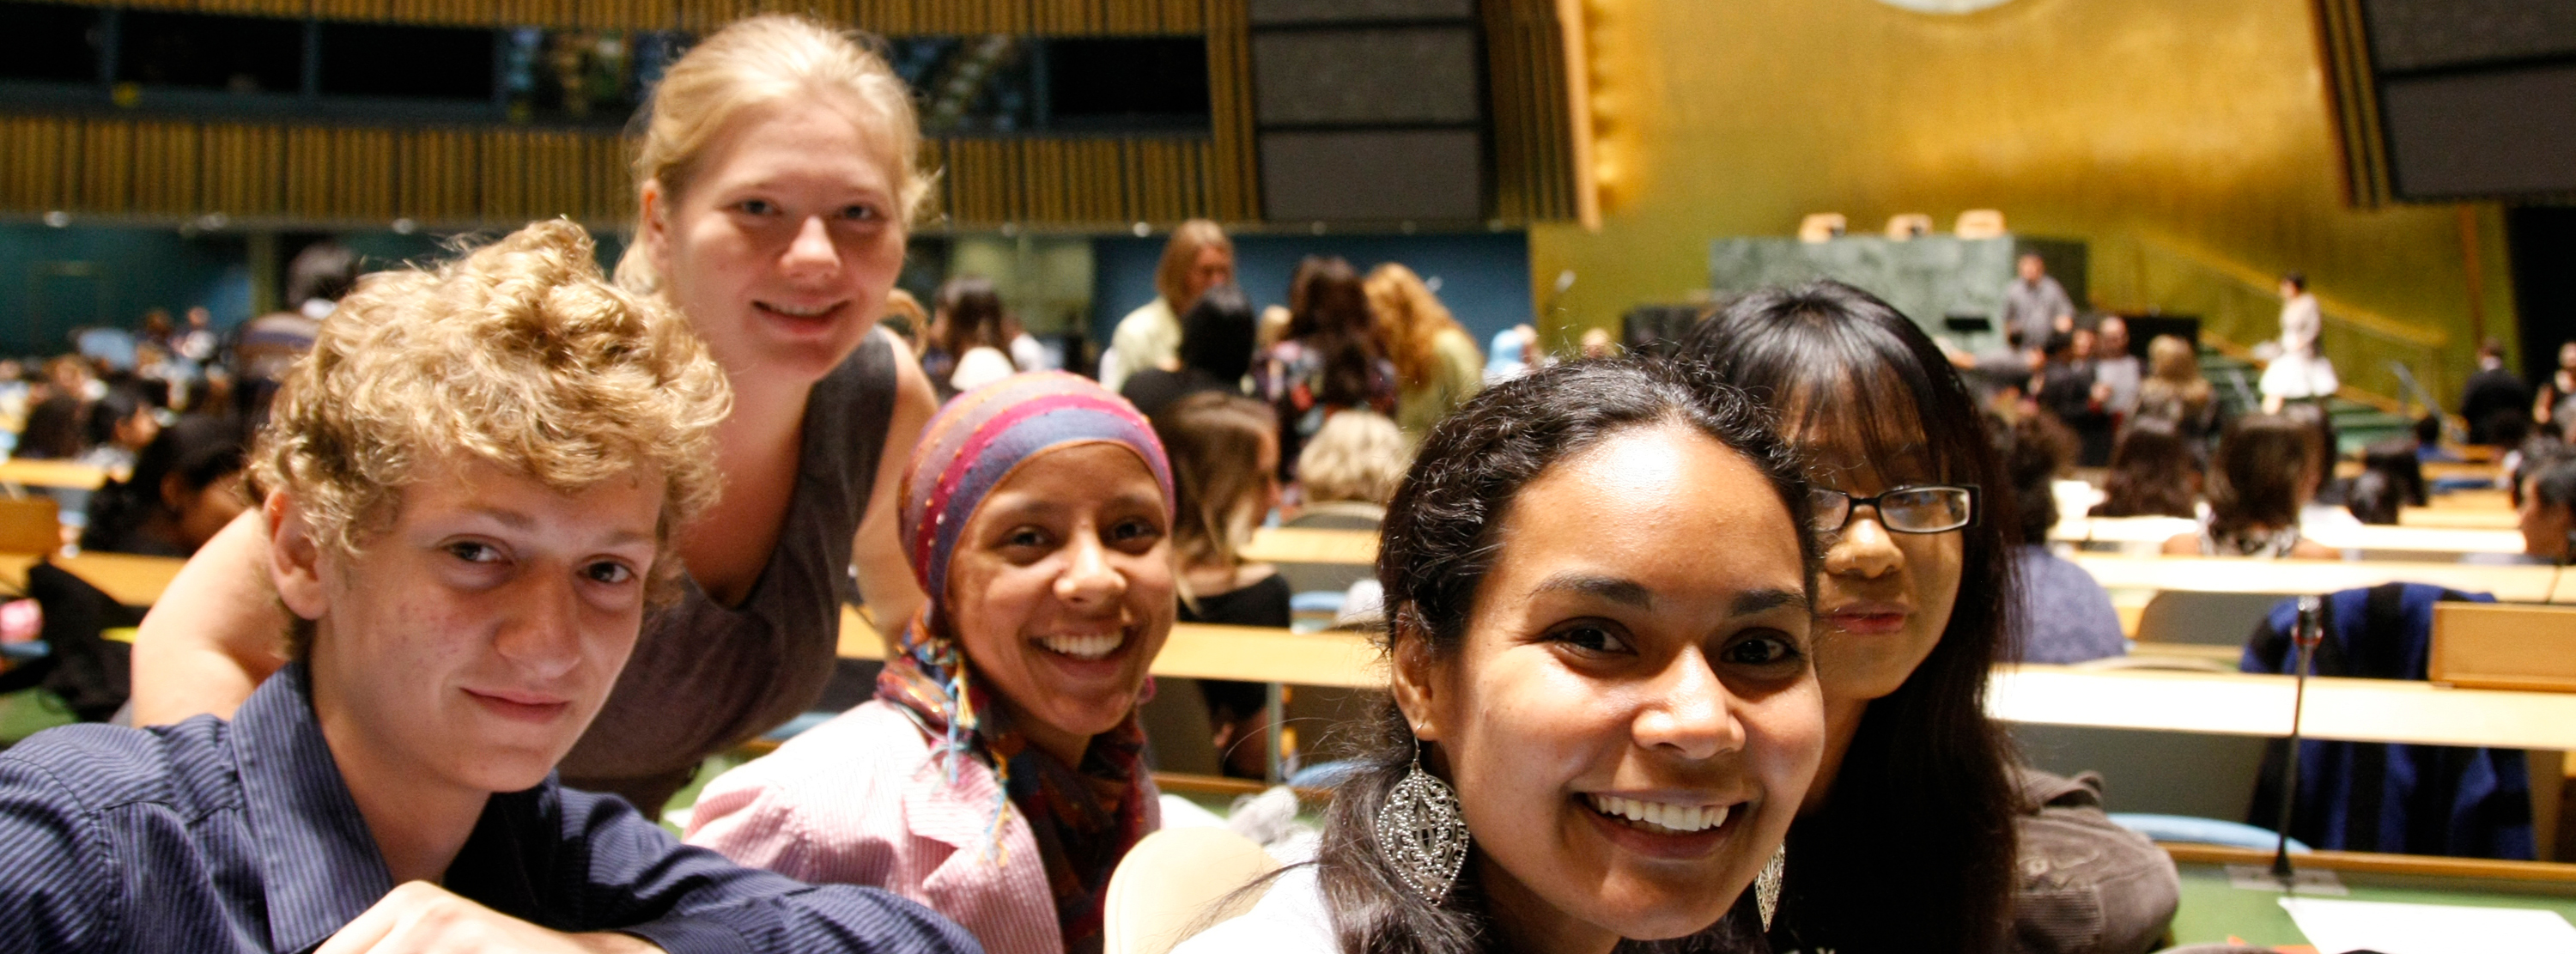 Un grupo de jvenes sonre desde el interior del Saln de la Asamblea General.